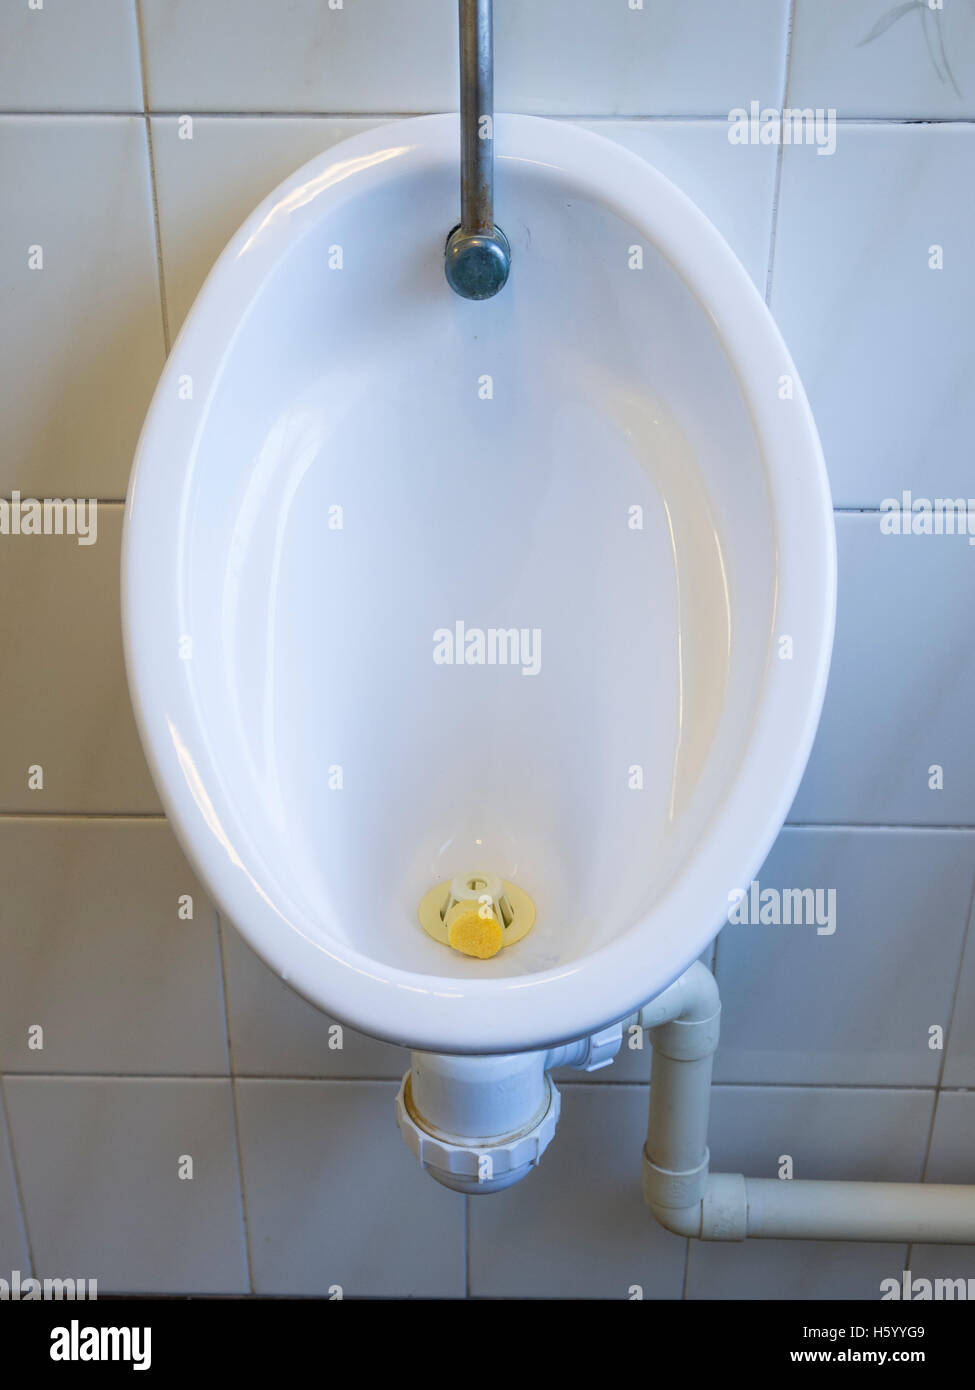 gents urinal Stock Photo